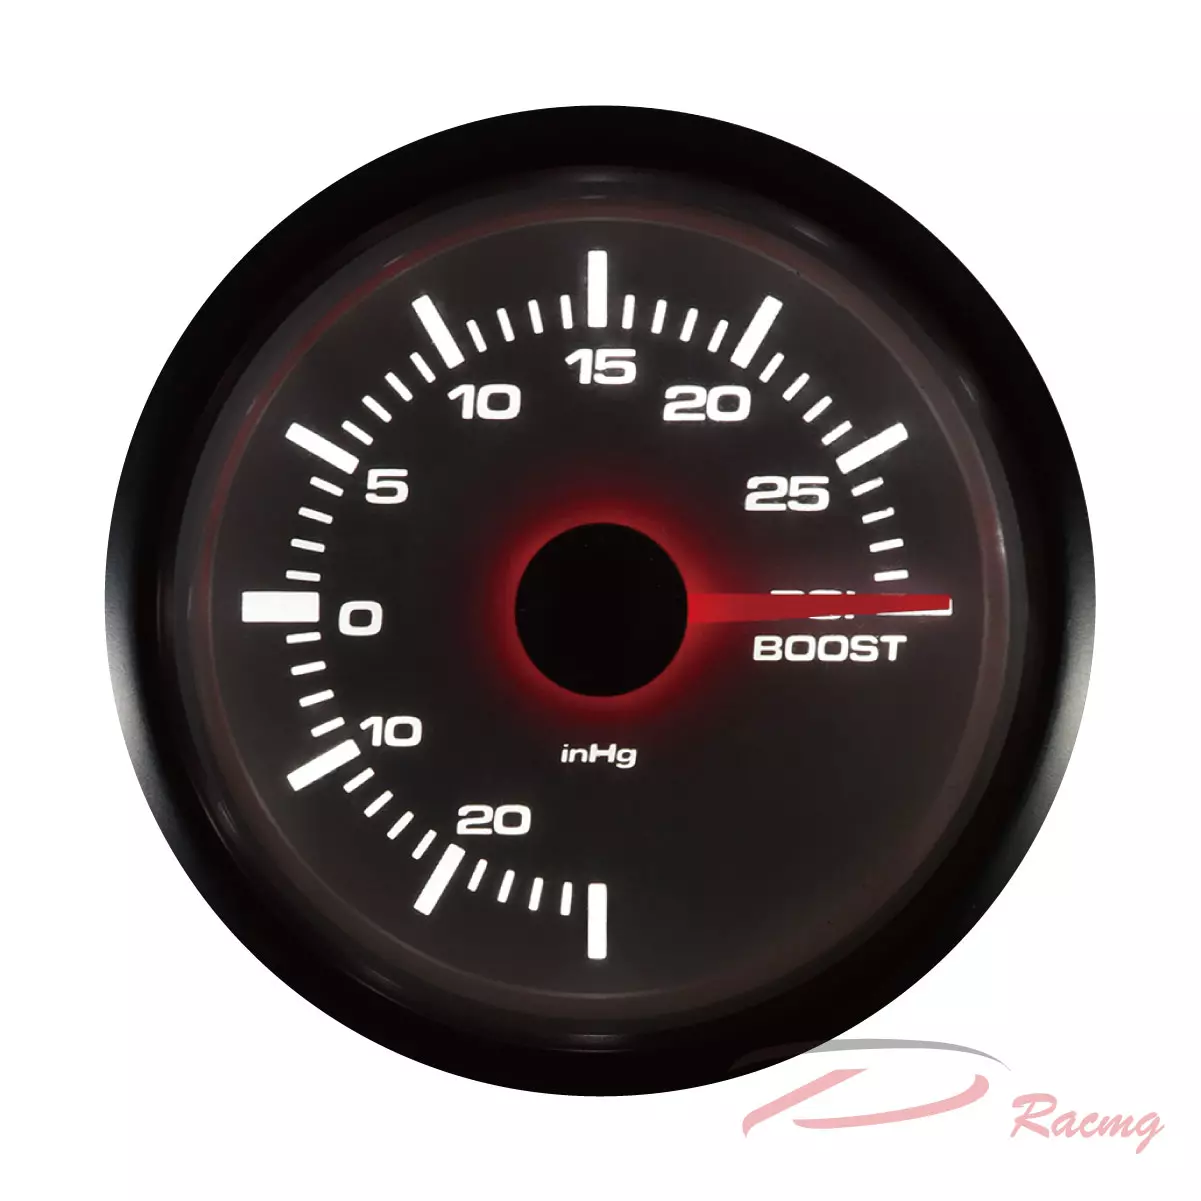 Dracing, Depo racing, boost gauge, gauge boost, autometer boost gauge, boost gauge kit, AutoMeter, performance boost gauges, accurate boost gauges, durable boost gauges, Pro-comp boost gauges, ultra-lite boost gauges, cobalt boost gauges, carbon fiber boost gauges, car boost gauges, racing boost gauges, truck boost gauges, suv boost gauges, 2-1/16" boost gauges, 2-5/8" boost gauges, boost gauges pillars, gauge pillar kits, boost/vacuum gauges, vacuum gauges, psi boost gauges, analog boost gauges, digital boost gages, air-core boost gauges, mechanical boost gauges, digital-stepper motor boost gauges, best boost gauges, professional boost gauges